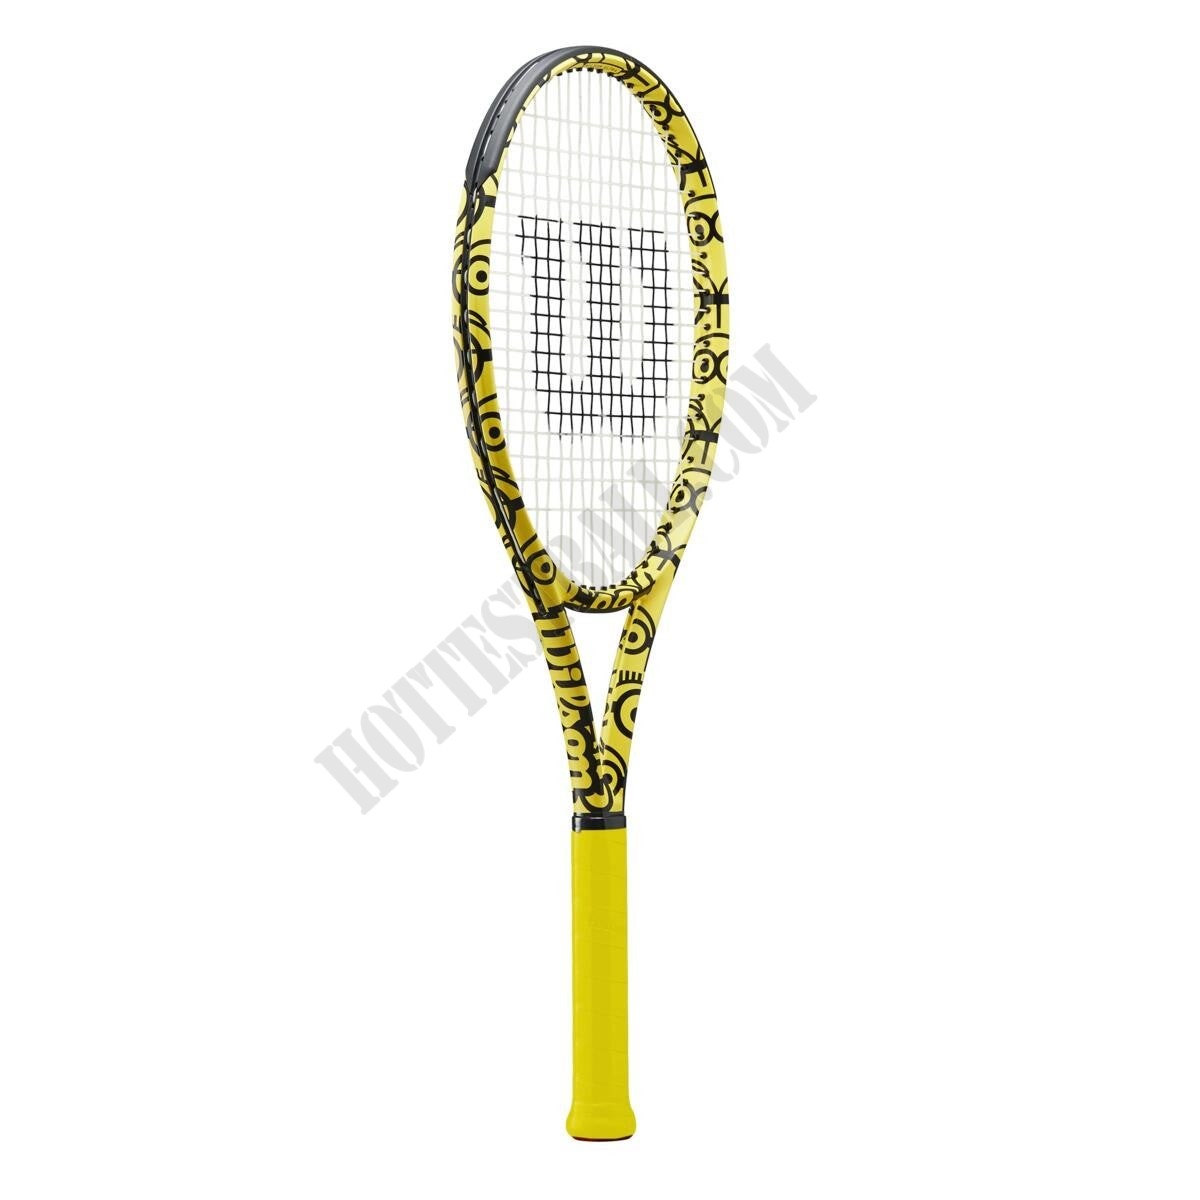 Minions Ultra 100 Tennis Racket - Wilson Discount Store - Minions Ultra 100 Tennis Racket - Wilson Discount Store